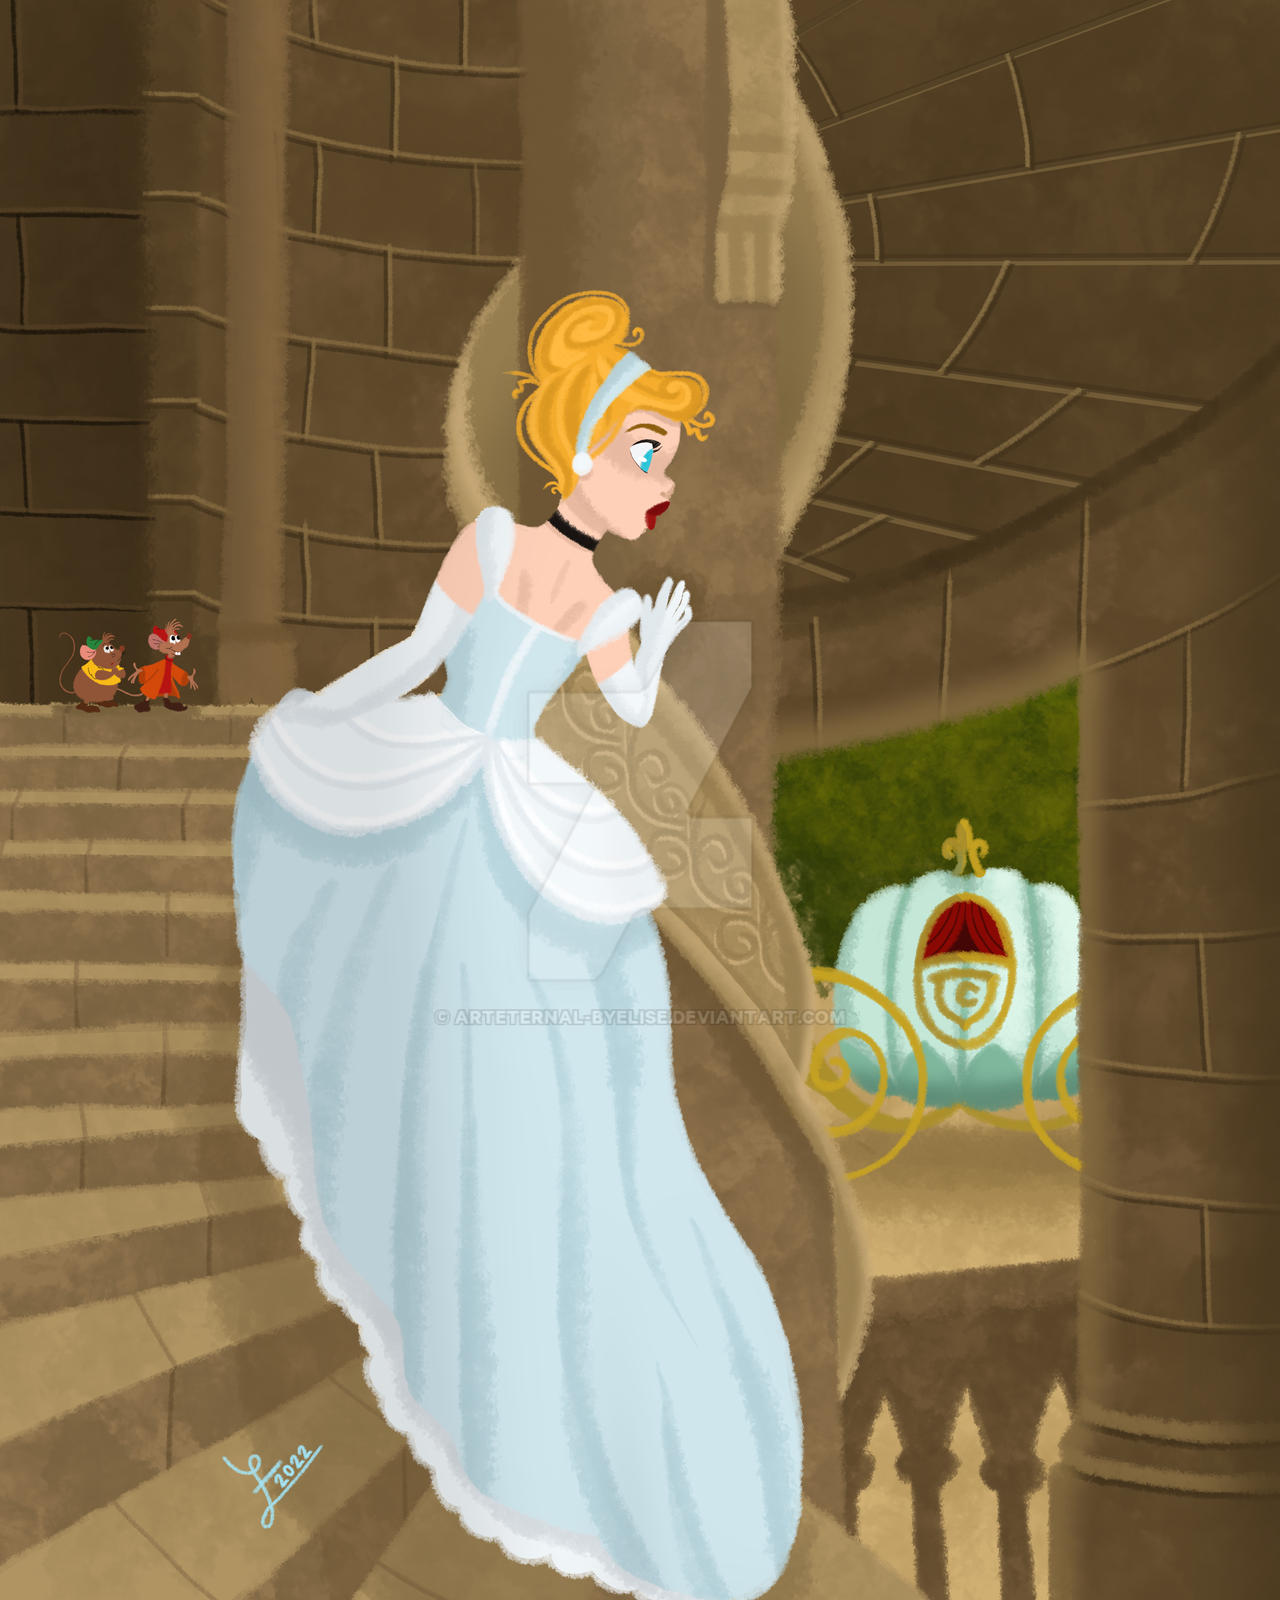 Disney Cinderella 1950 by ArtEternal-byElise on DeviantArt